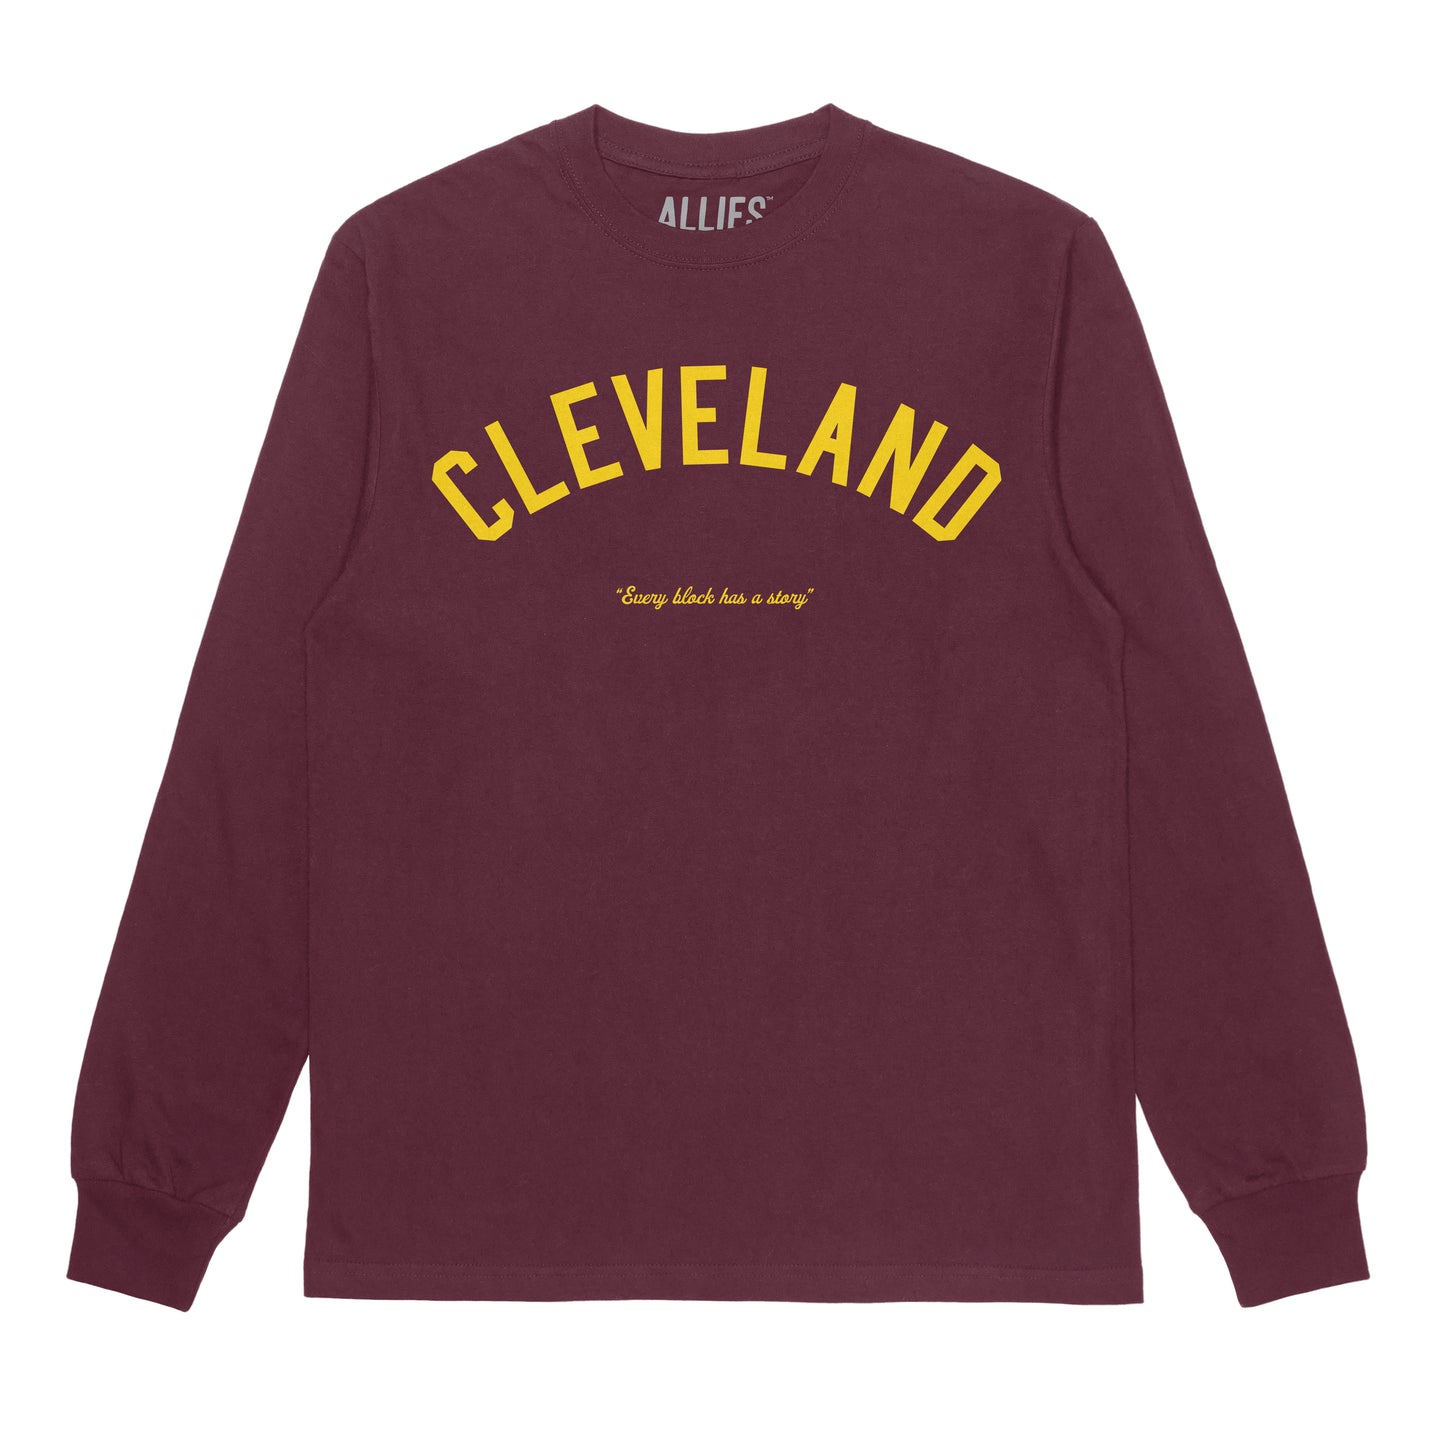 Cleveland Story T-shirt